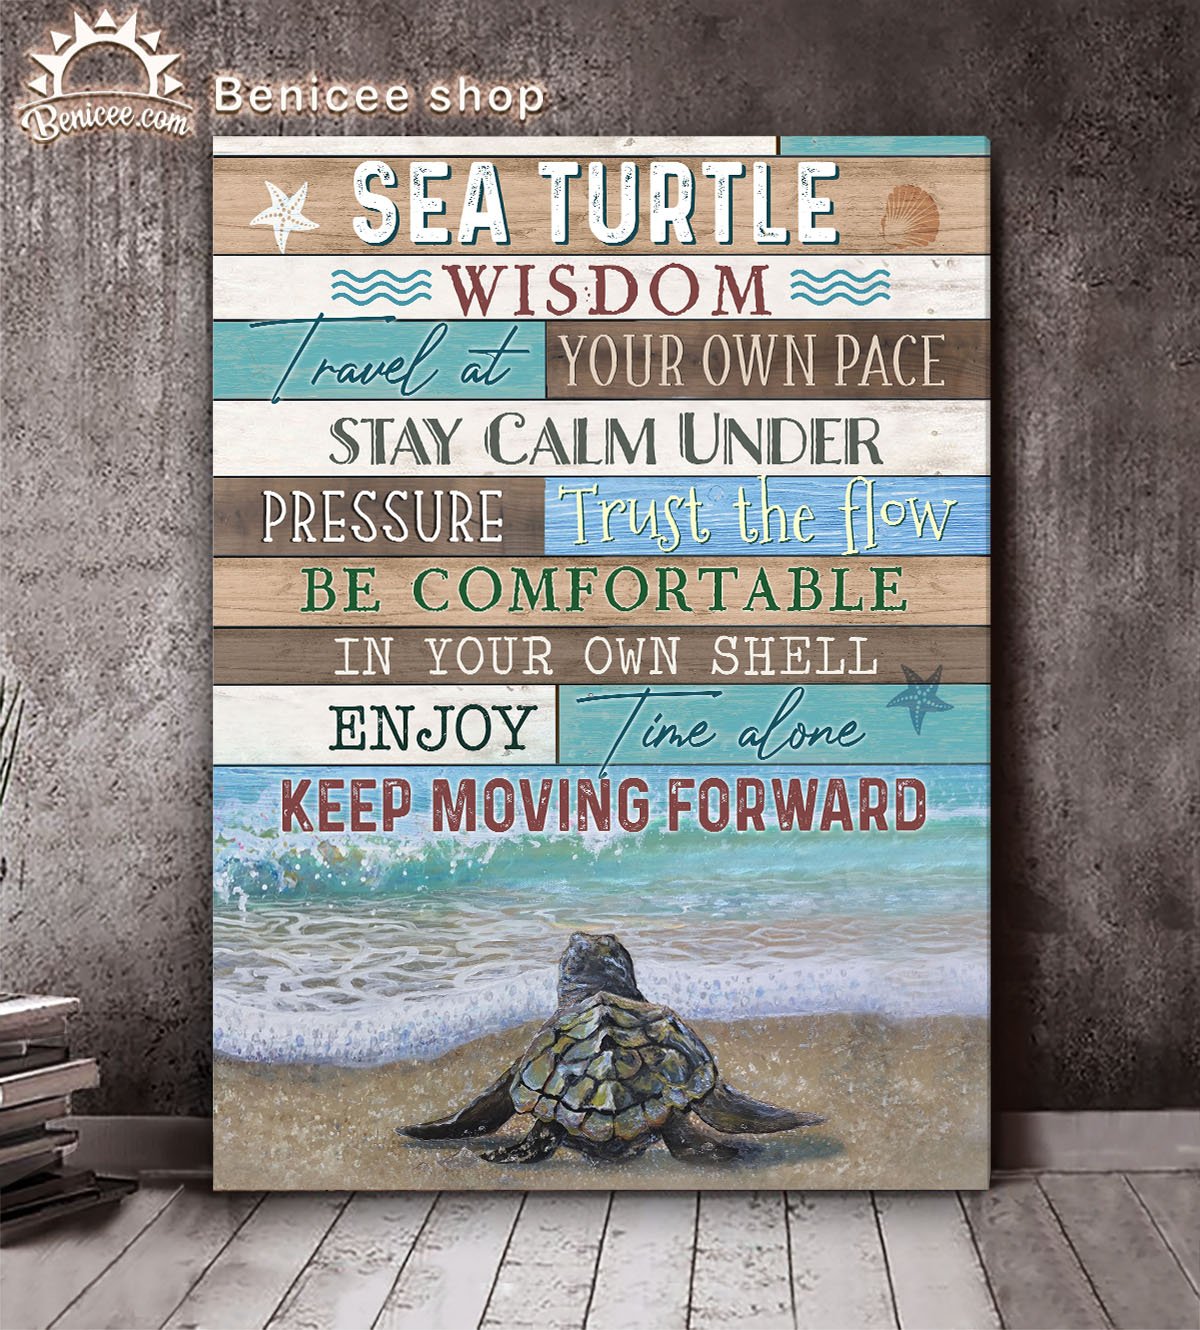 Top 10 Ocean Wall Art Poster Canvas – Turtle Sea Turtle Wisdom Travel ...